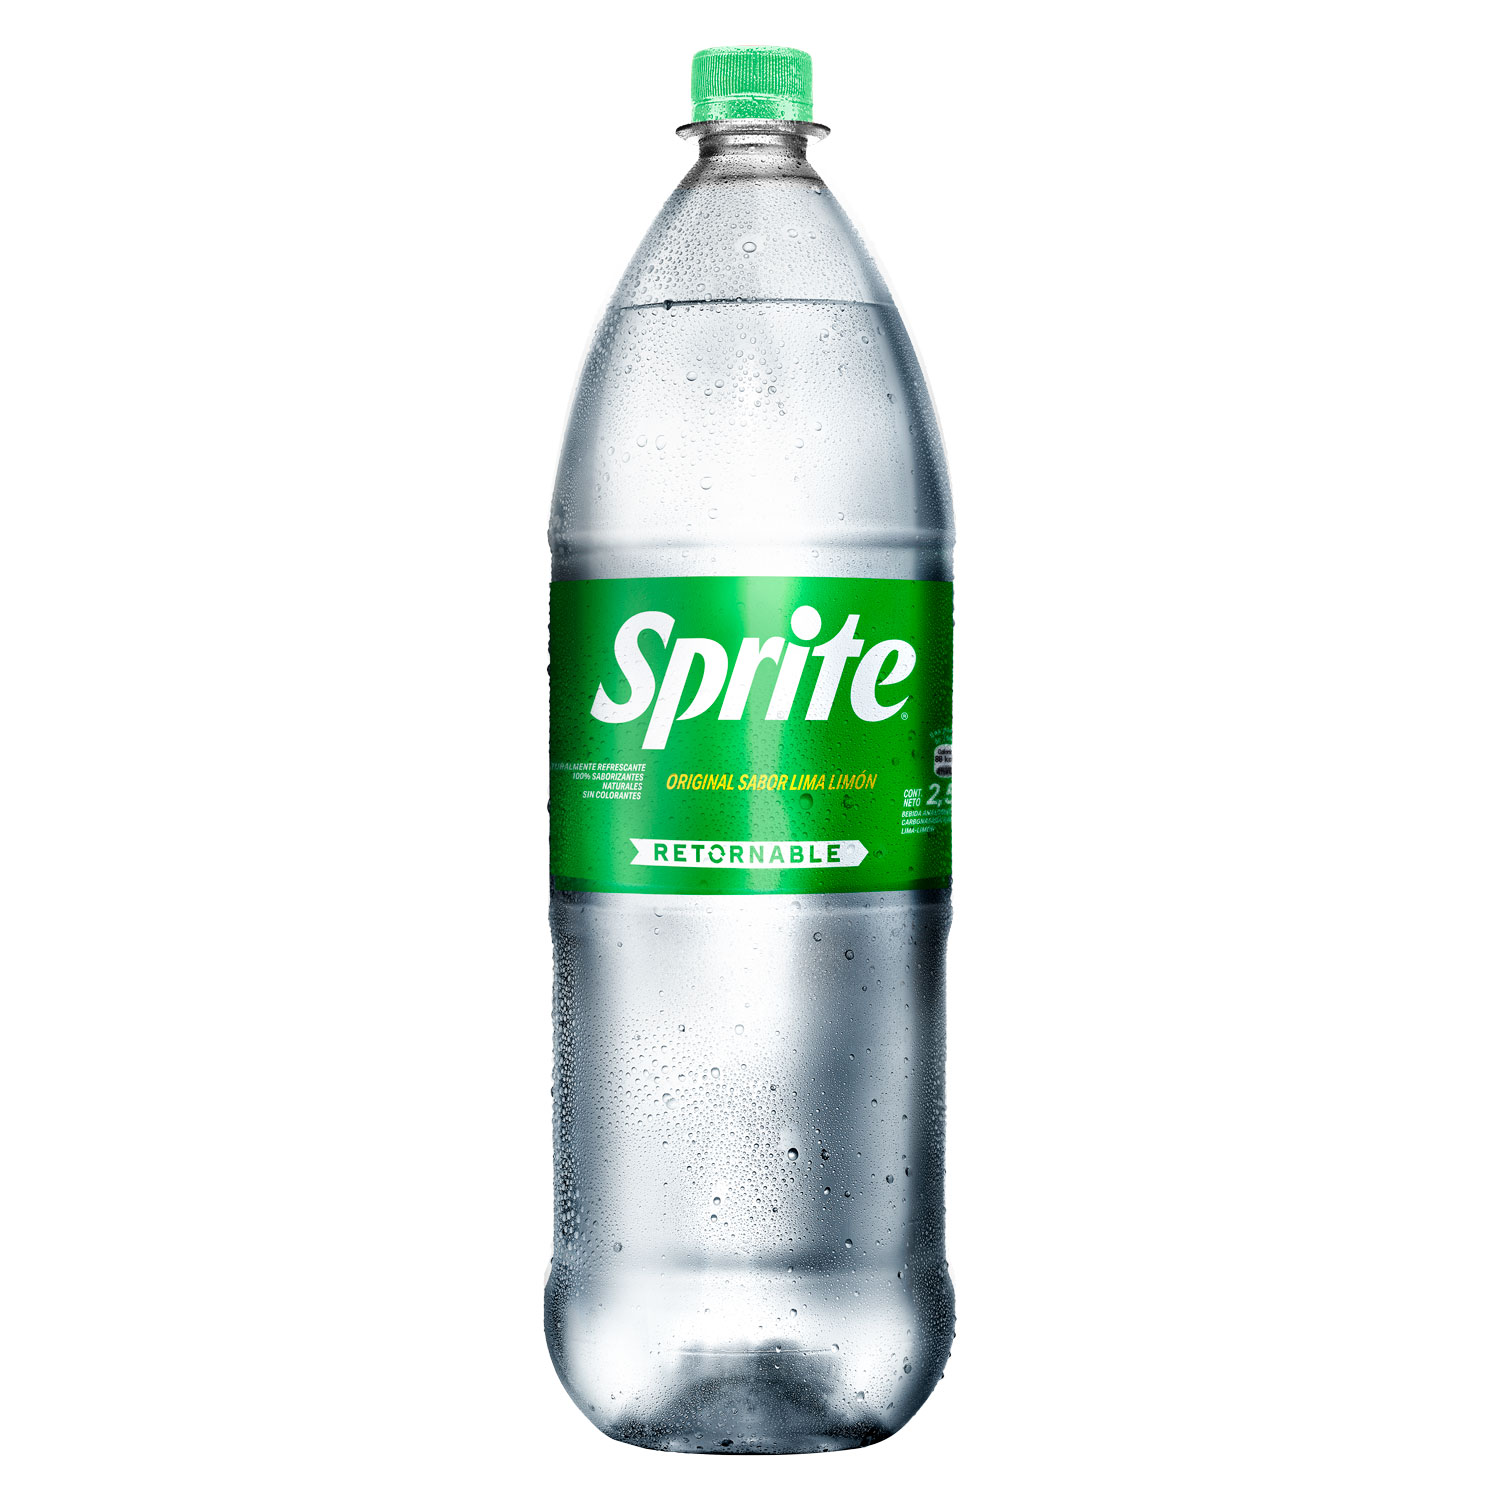 Botella de Sprite Lima Limón 2,5 Retornable